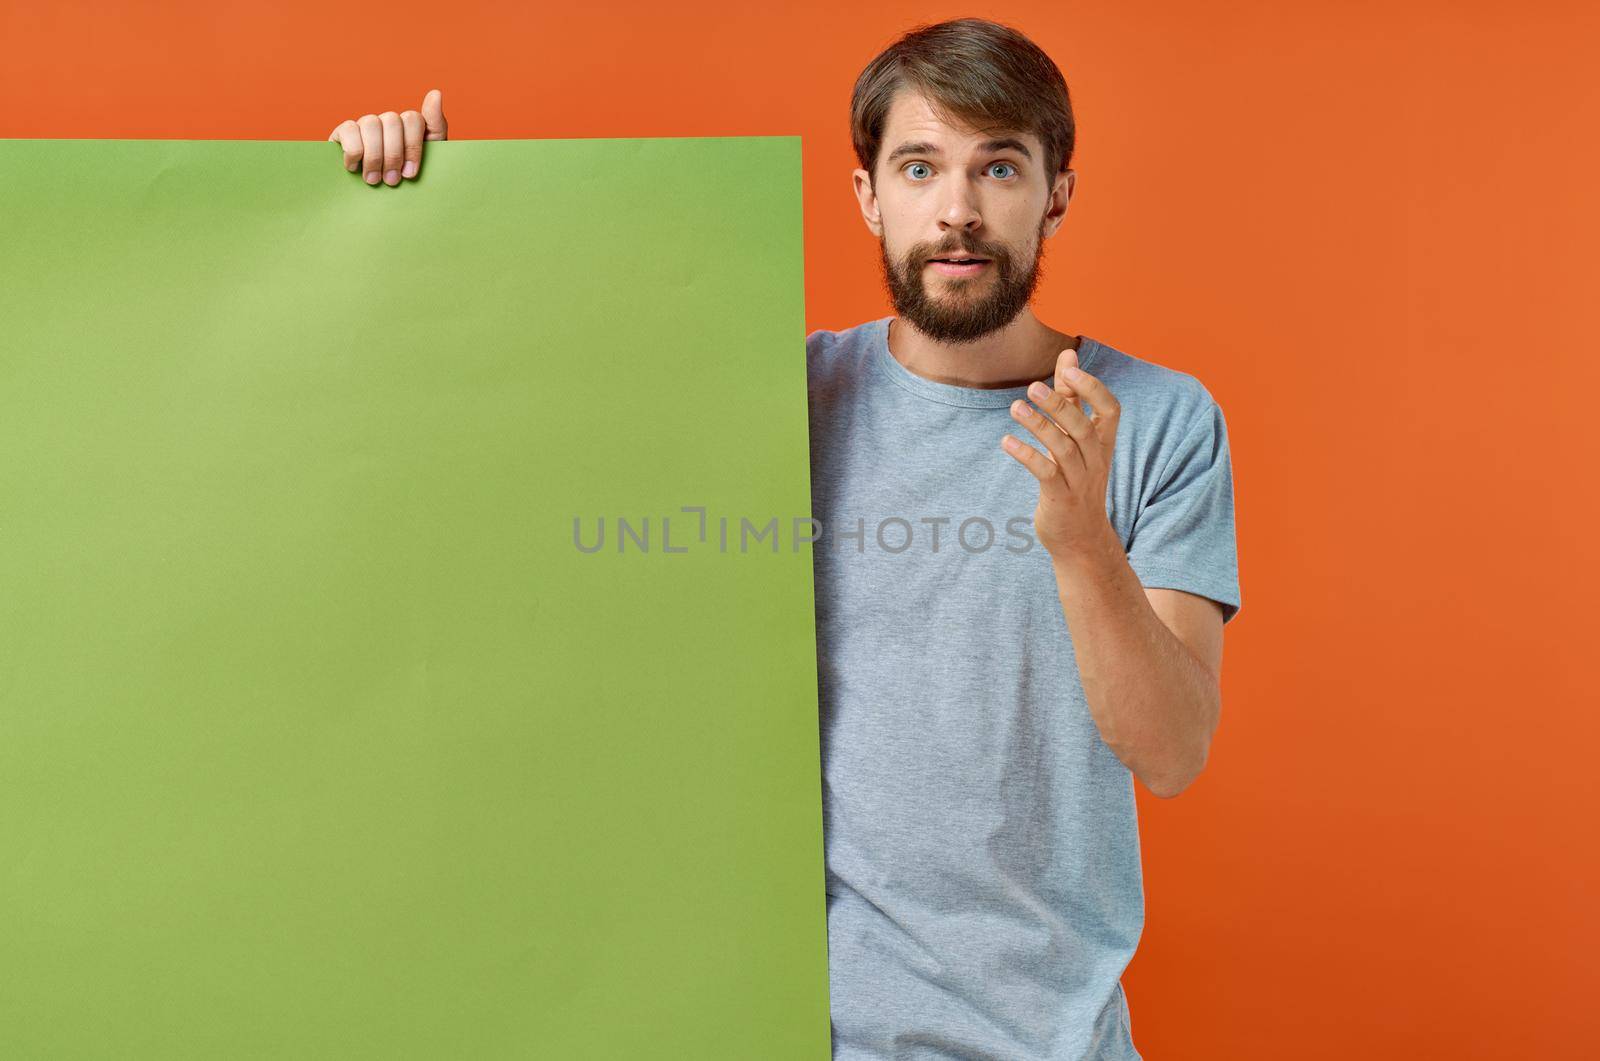 emotional man t shirts green mockup poster presentation marketing by SHOTPRIME